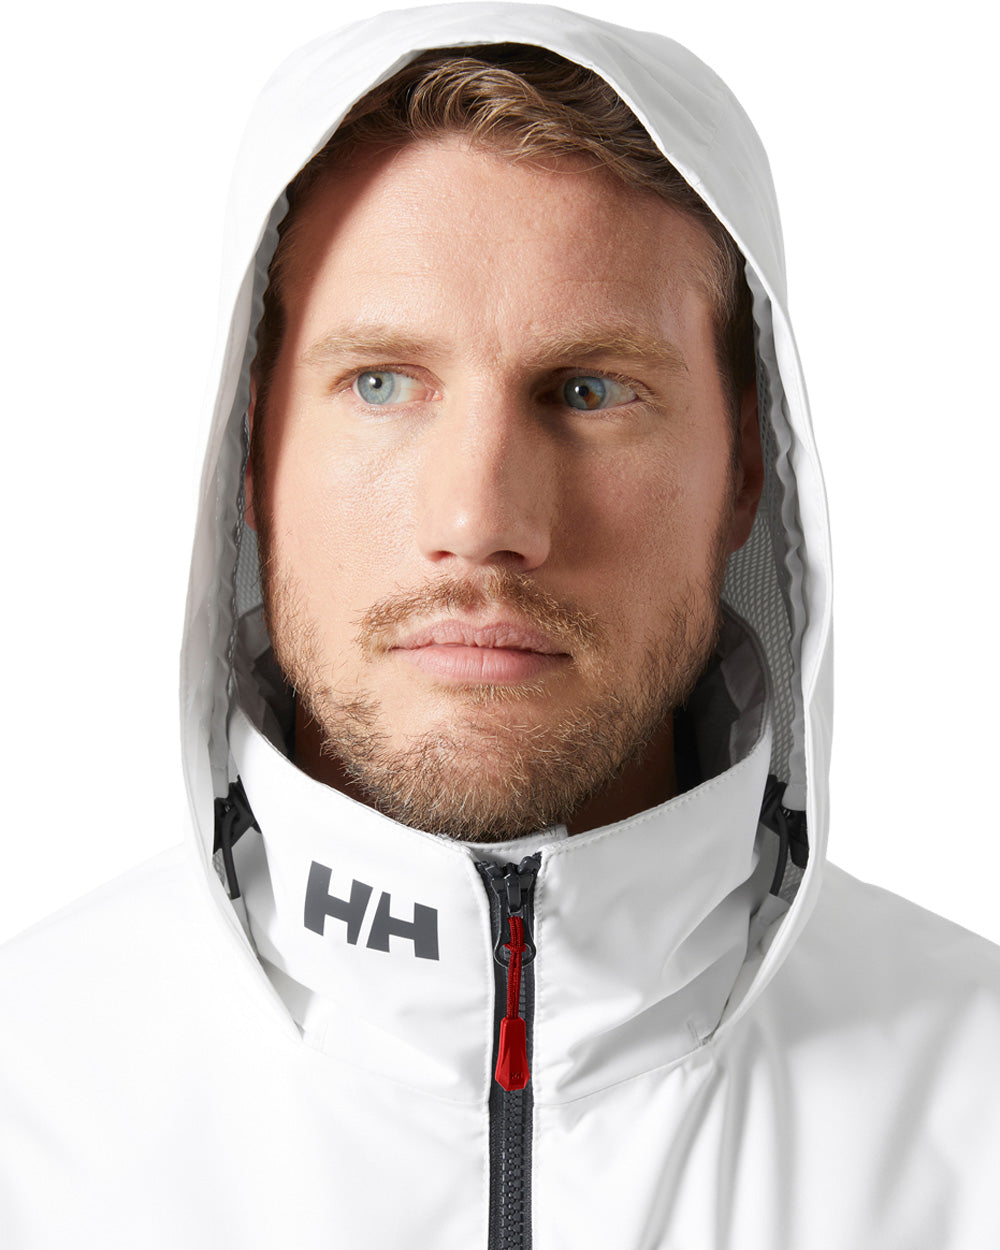 White coloured Helly Hansen Mens Crew Hooded Midlayer Jacket on white background 